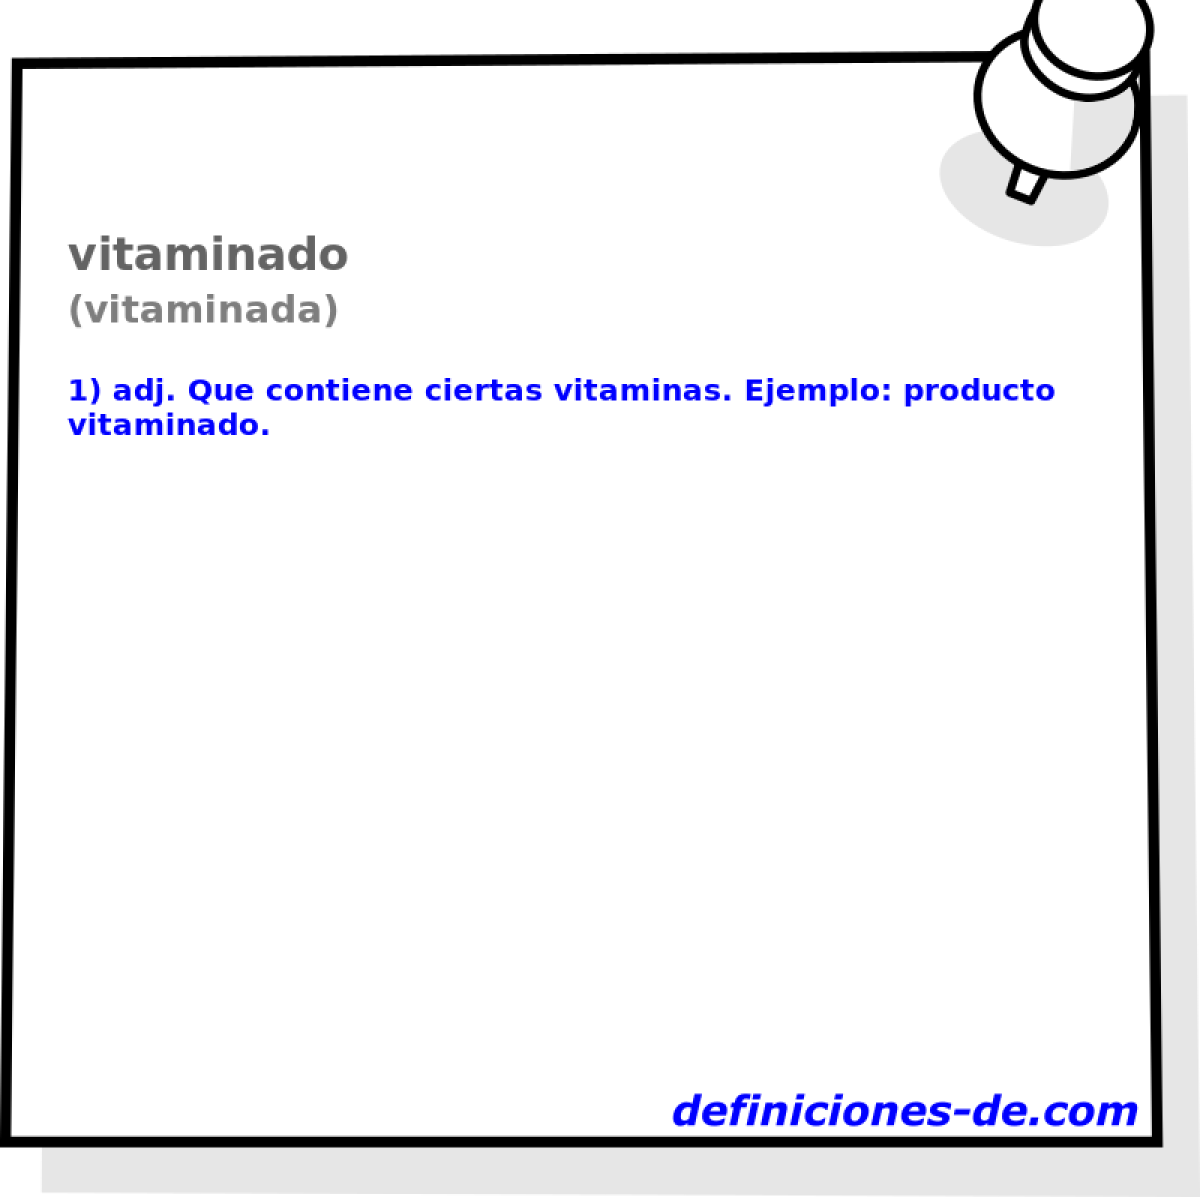 vitaminado (vitaminada)